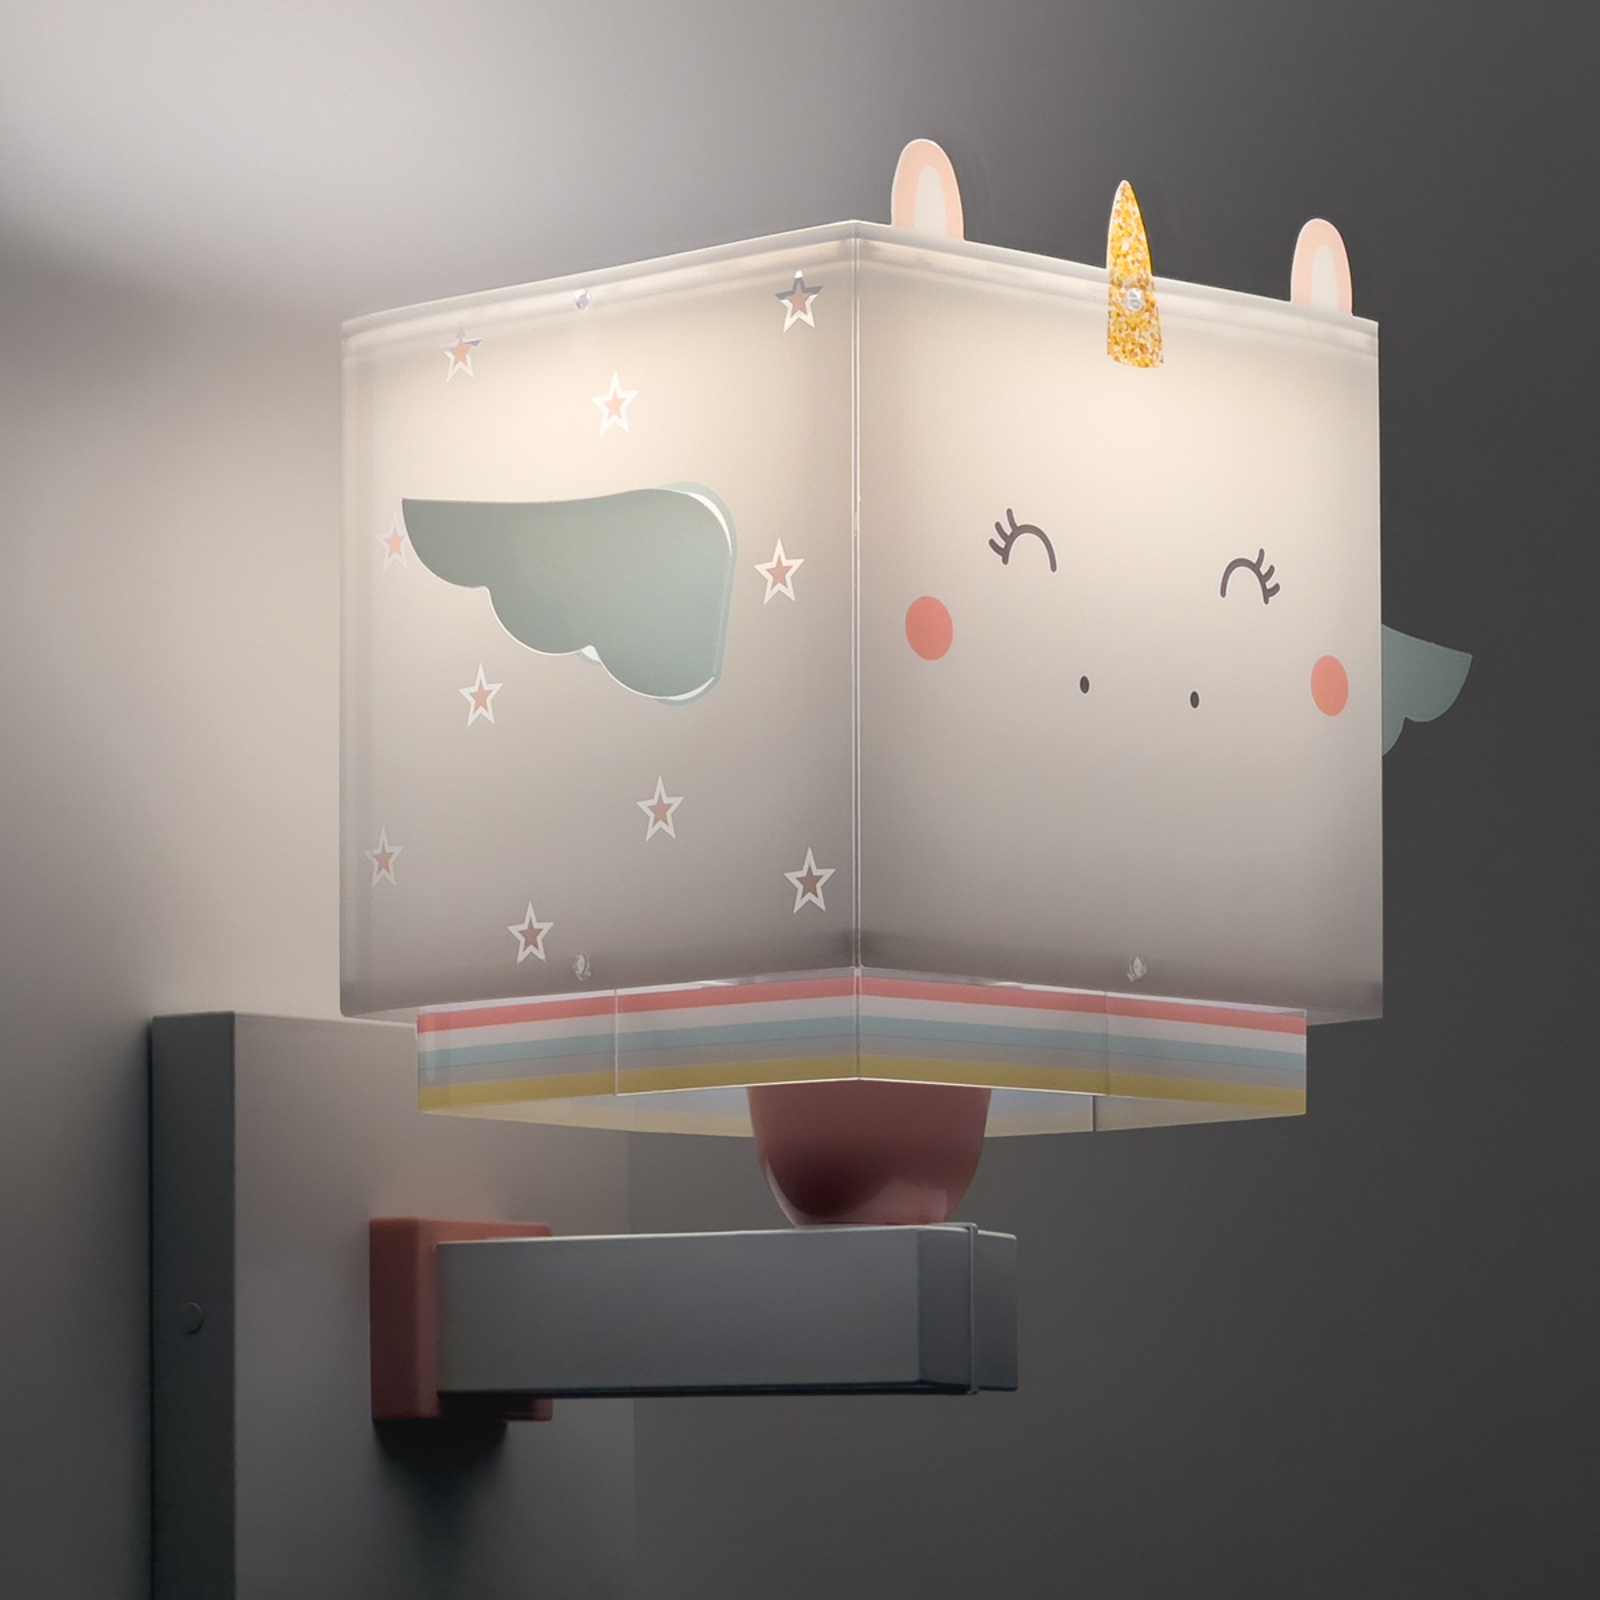 Dalber Little Unicorn wall light with a plug